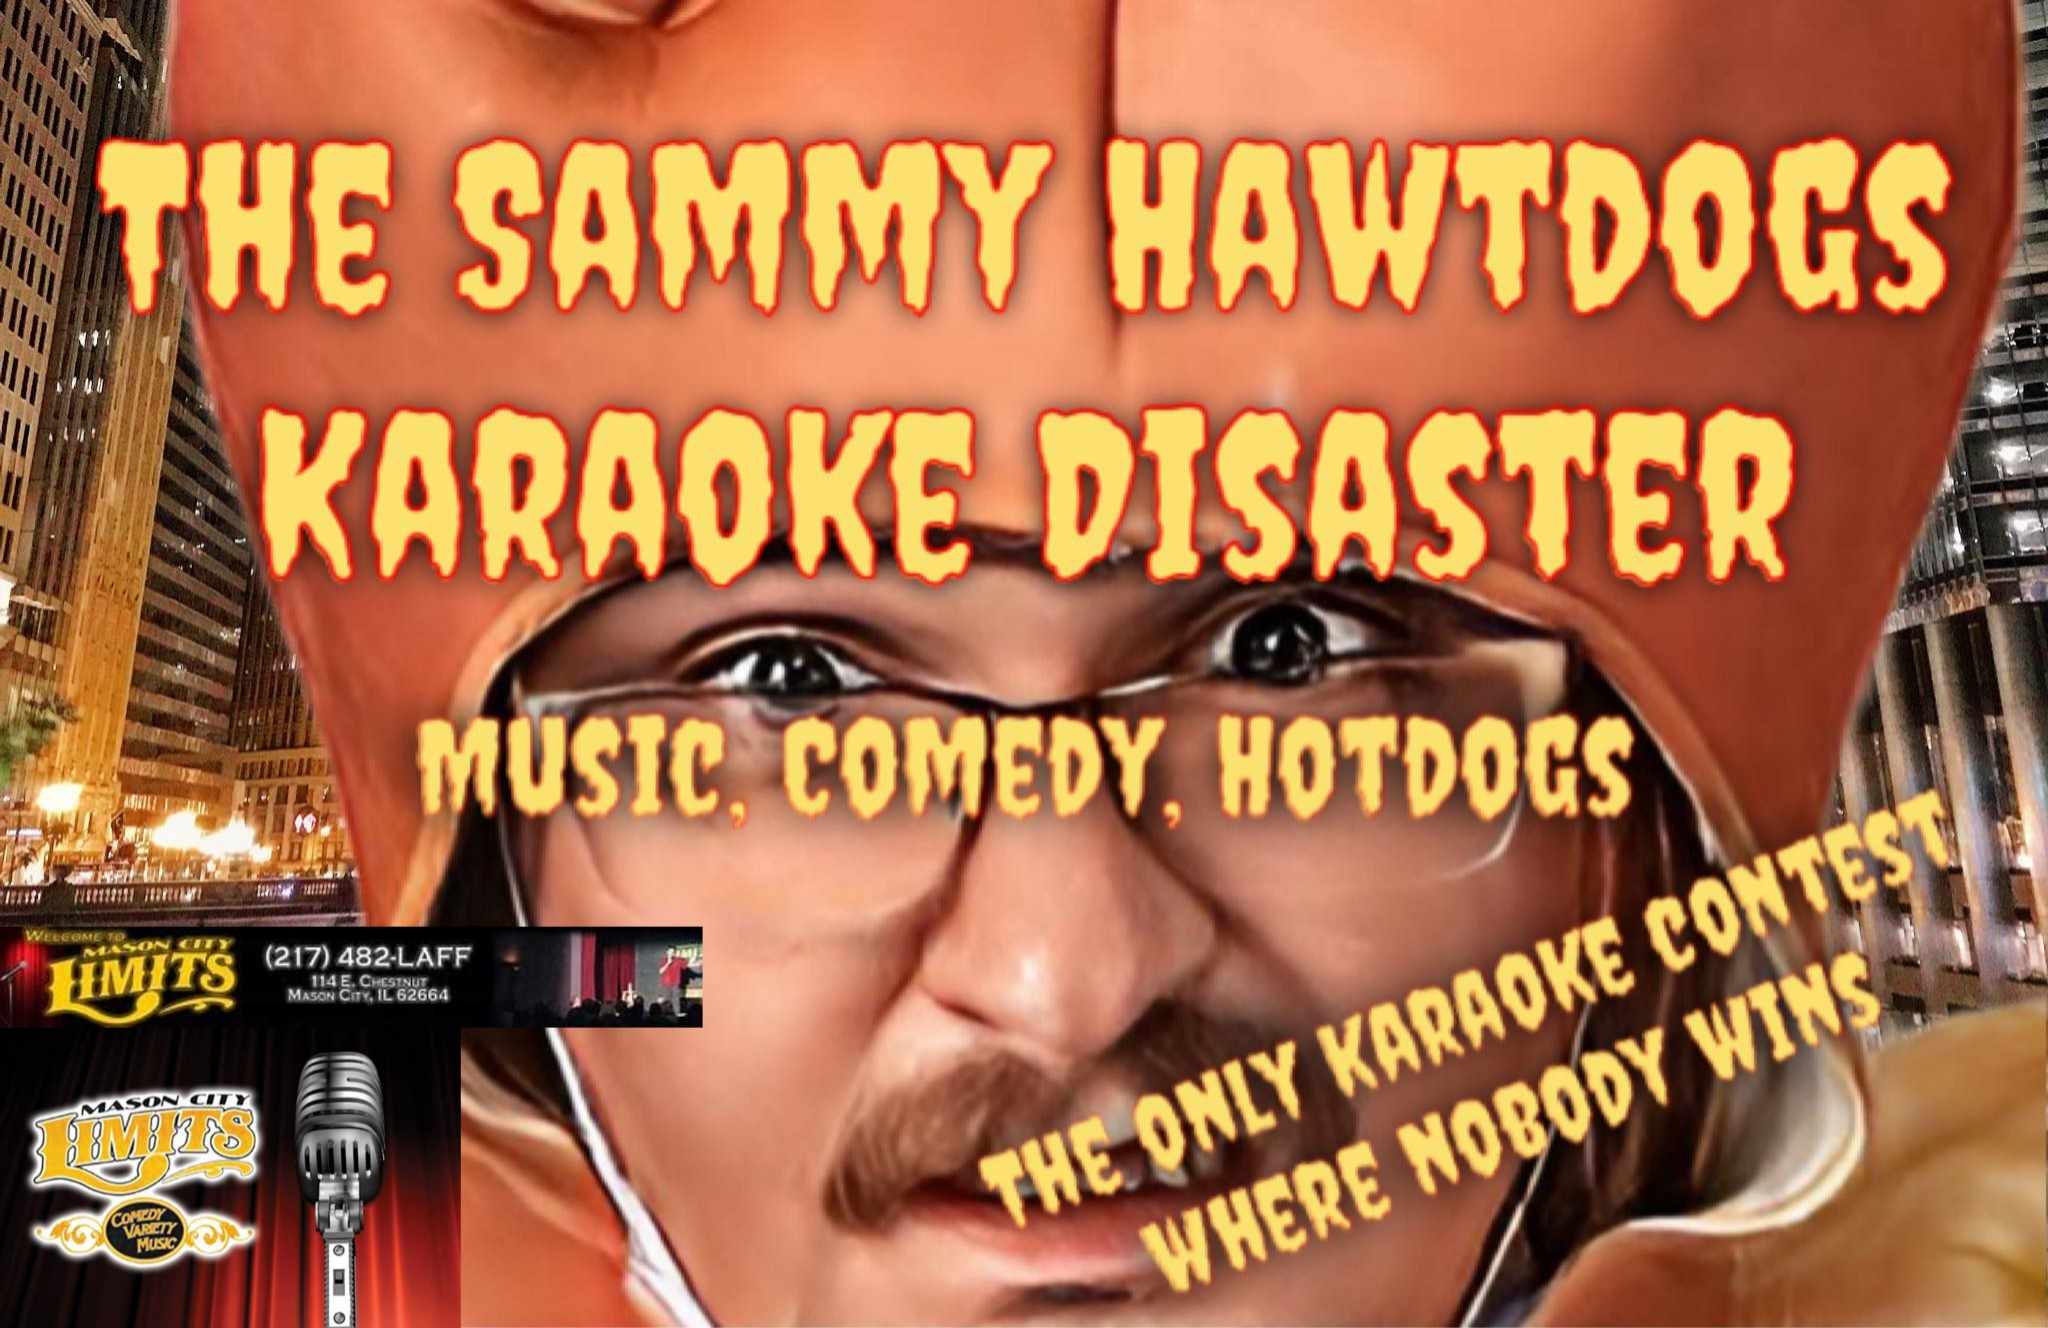 Comedian Karaokee Disaster